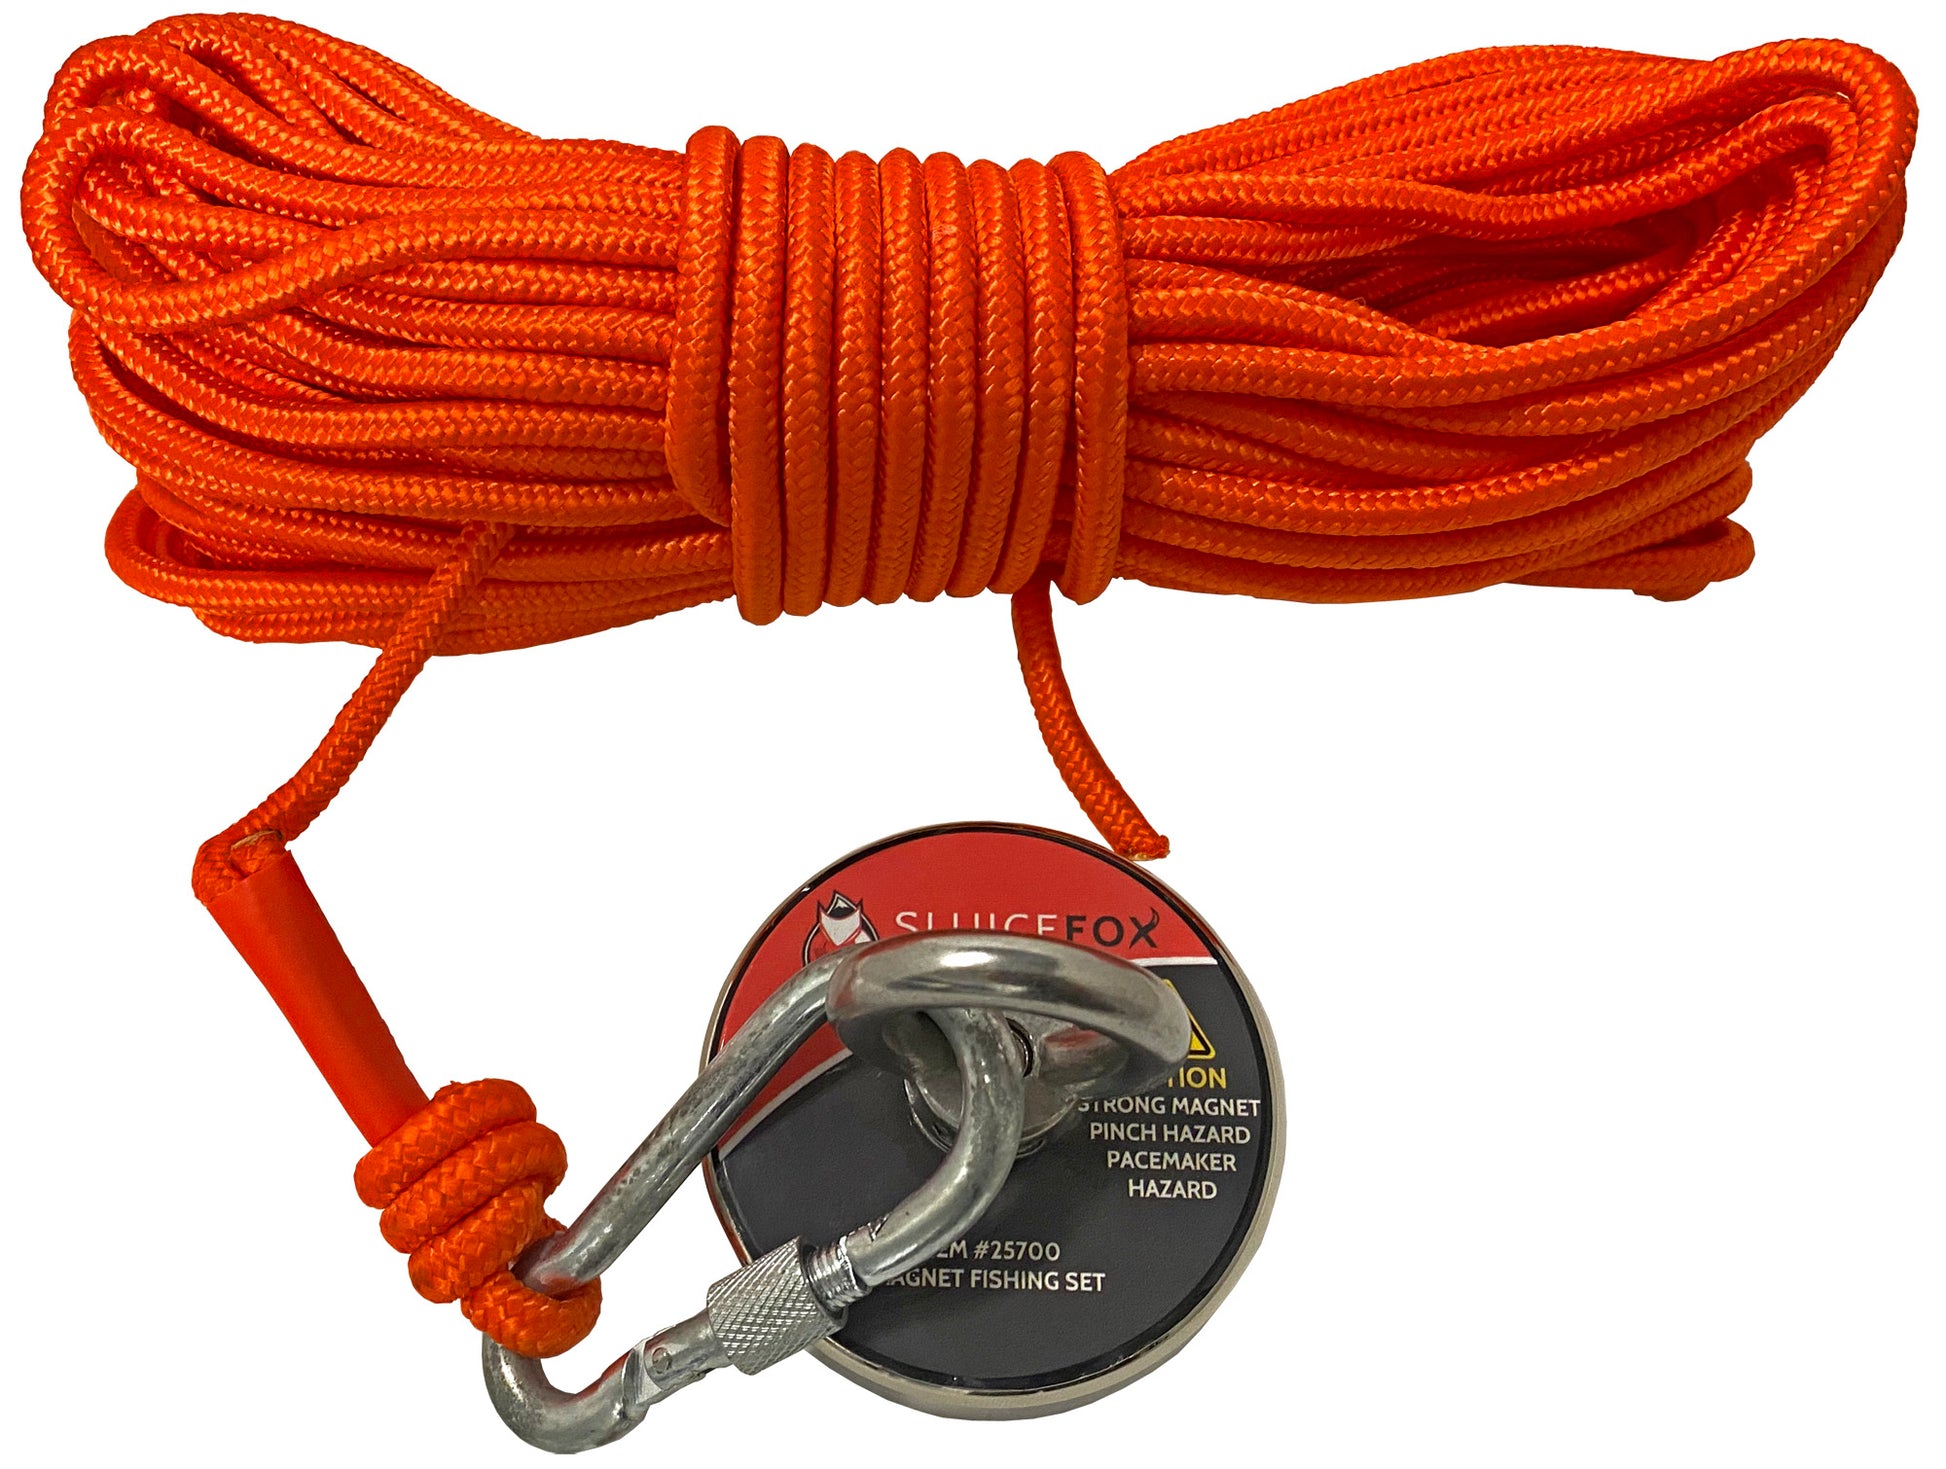 Sluice Fox magnet fishing kit; strong 550 pound capacity